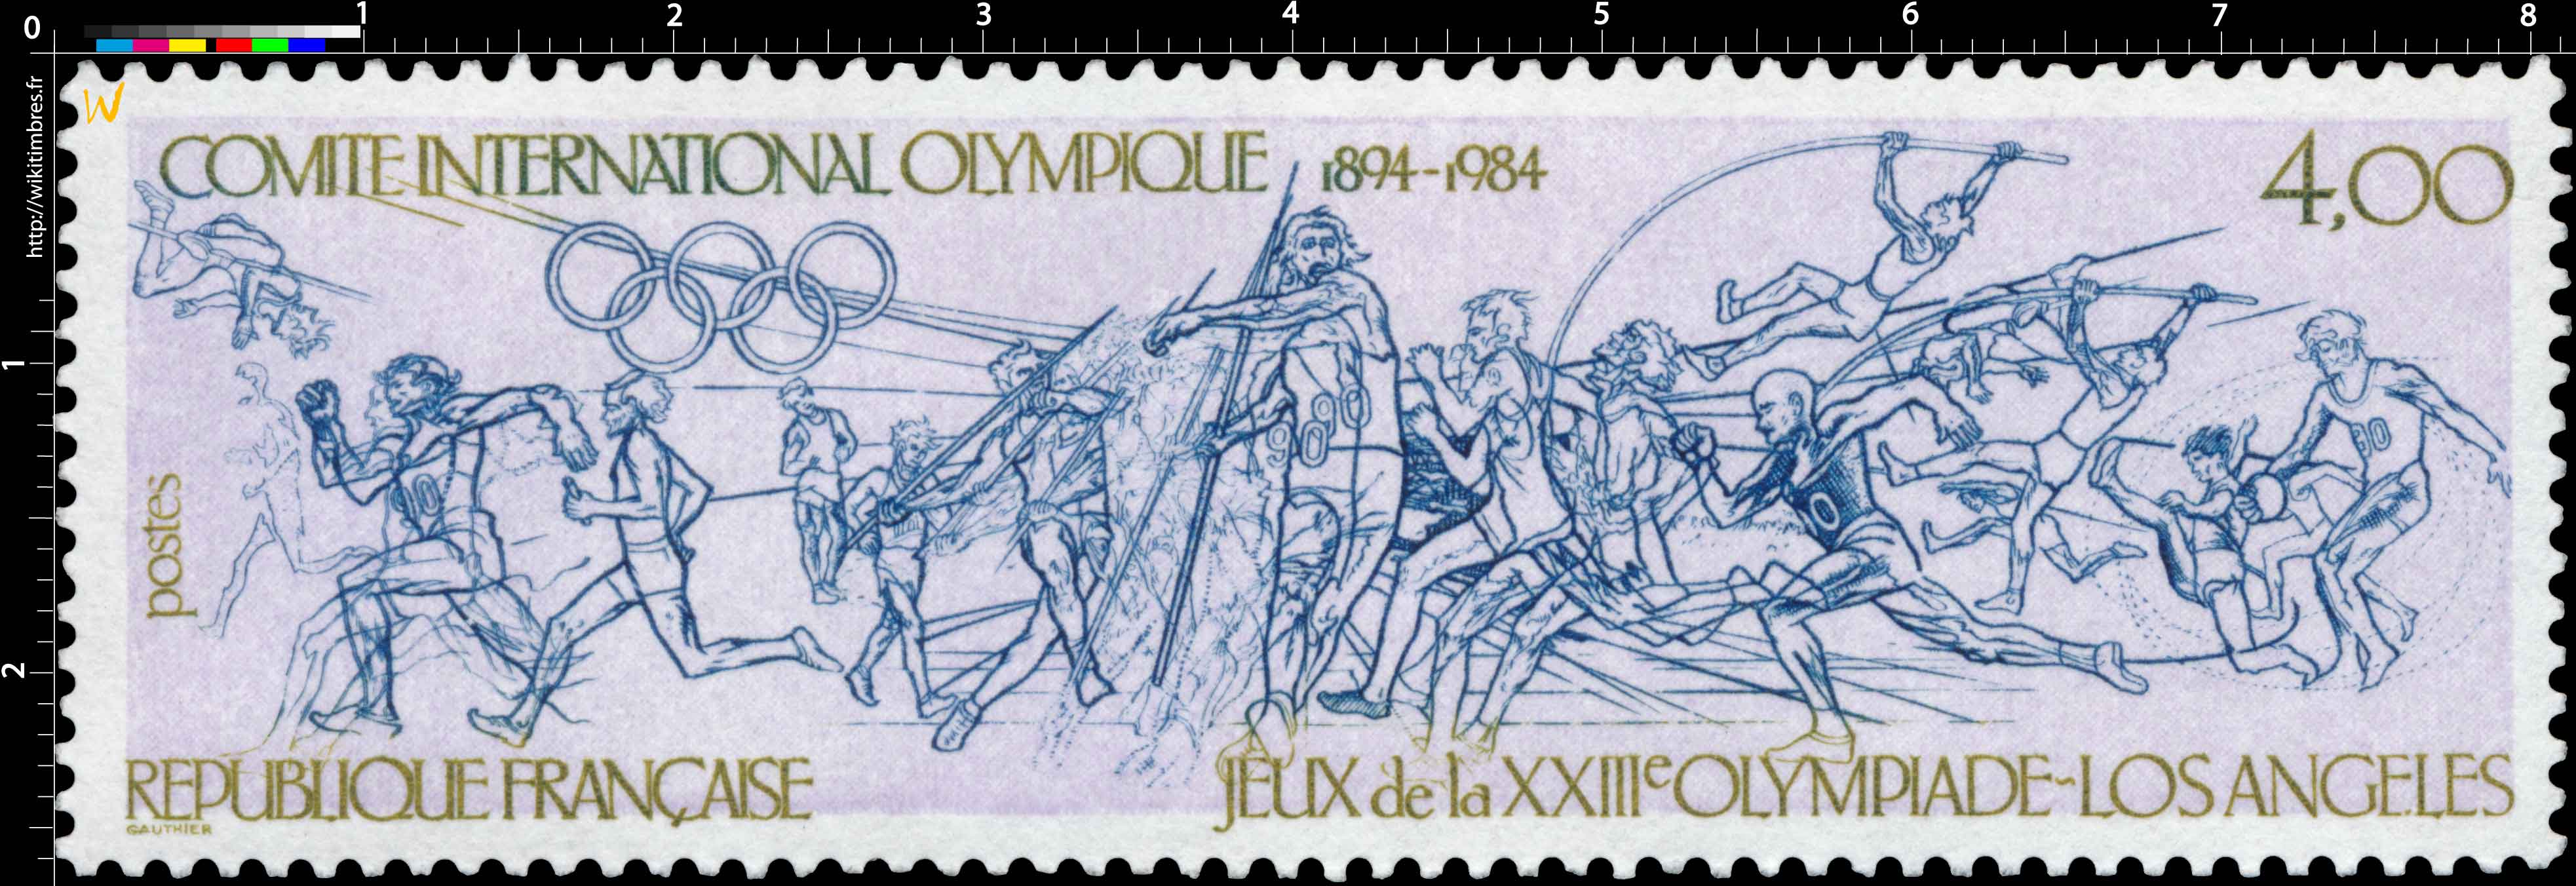 COMITE INTERNATIONALE OLYMPIQUE 1894-1984 JEUX de la XXIIIe OLYMPIADE - LOS ANGELES